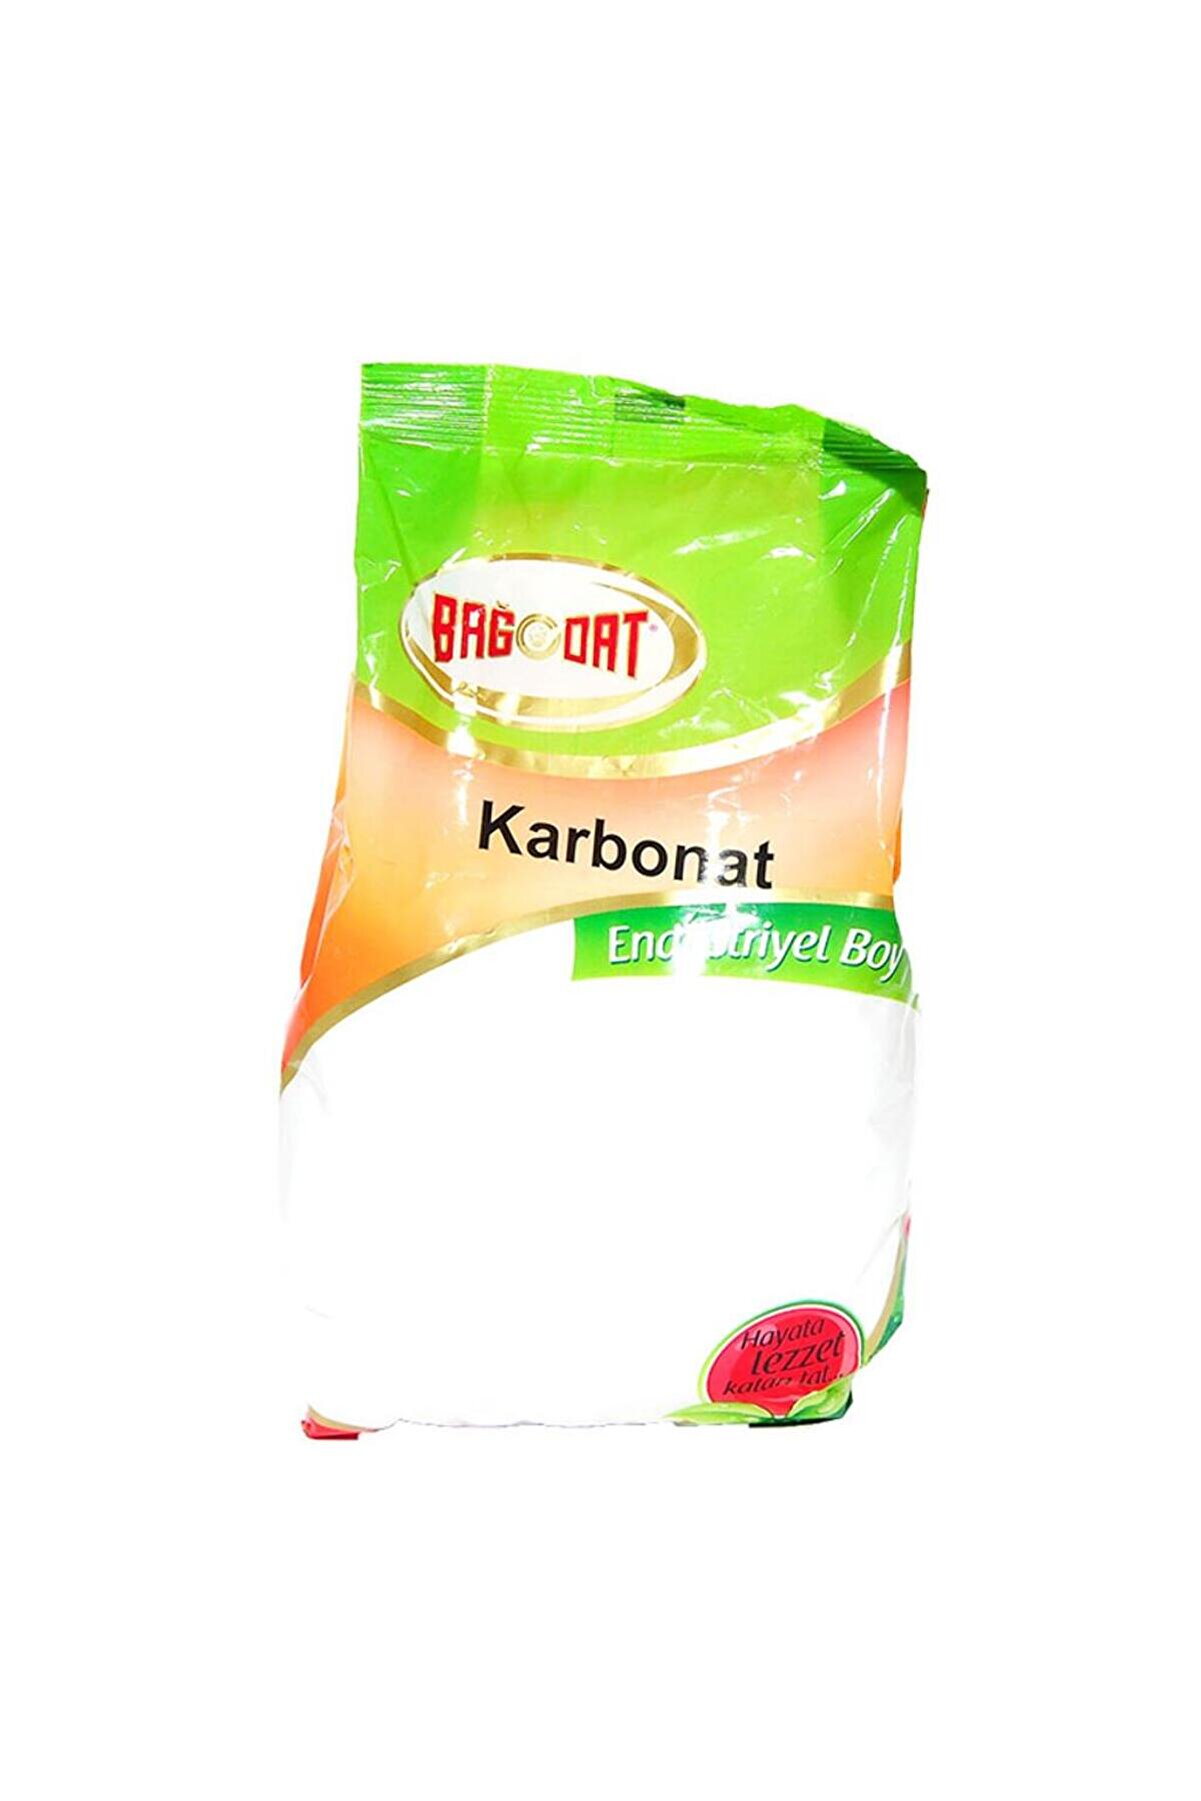 Bağdat Baharat Karbonat 1kg Endüstriyel Boy Kiloluk Paket